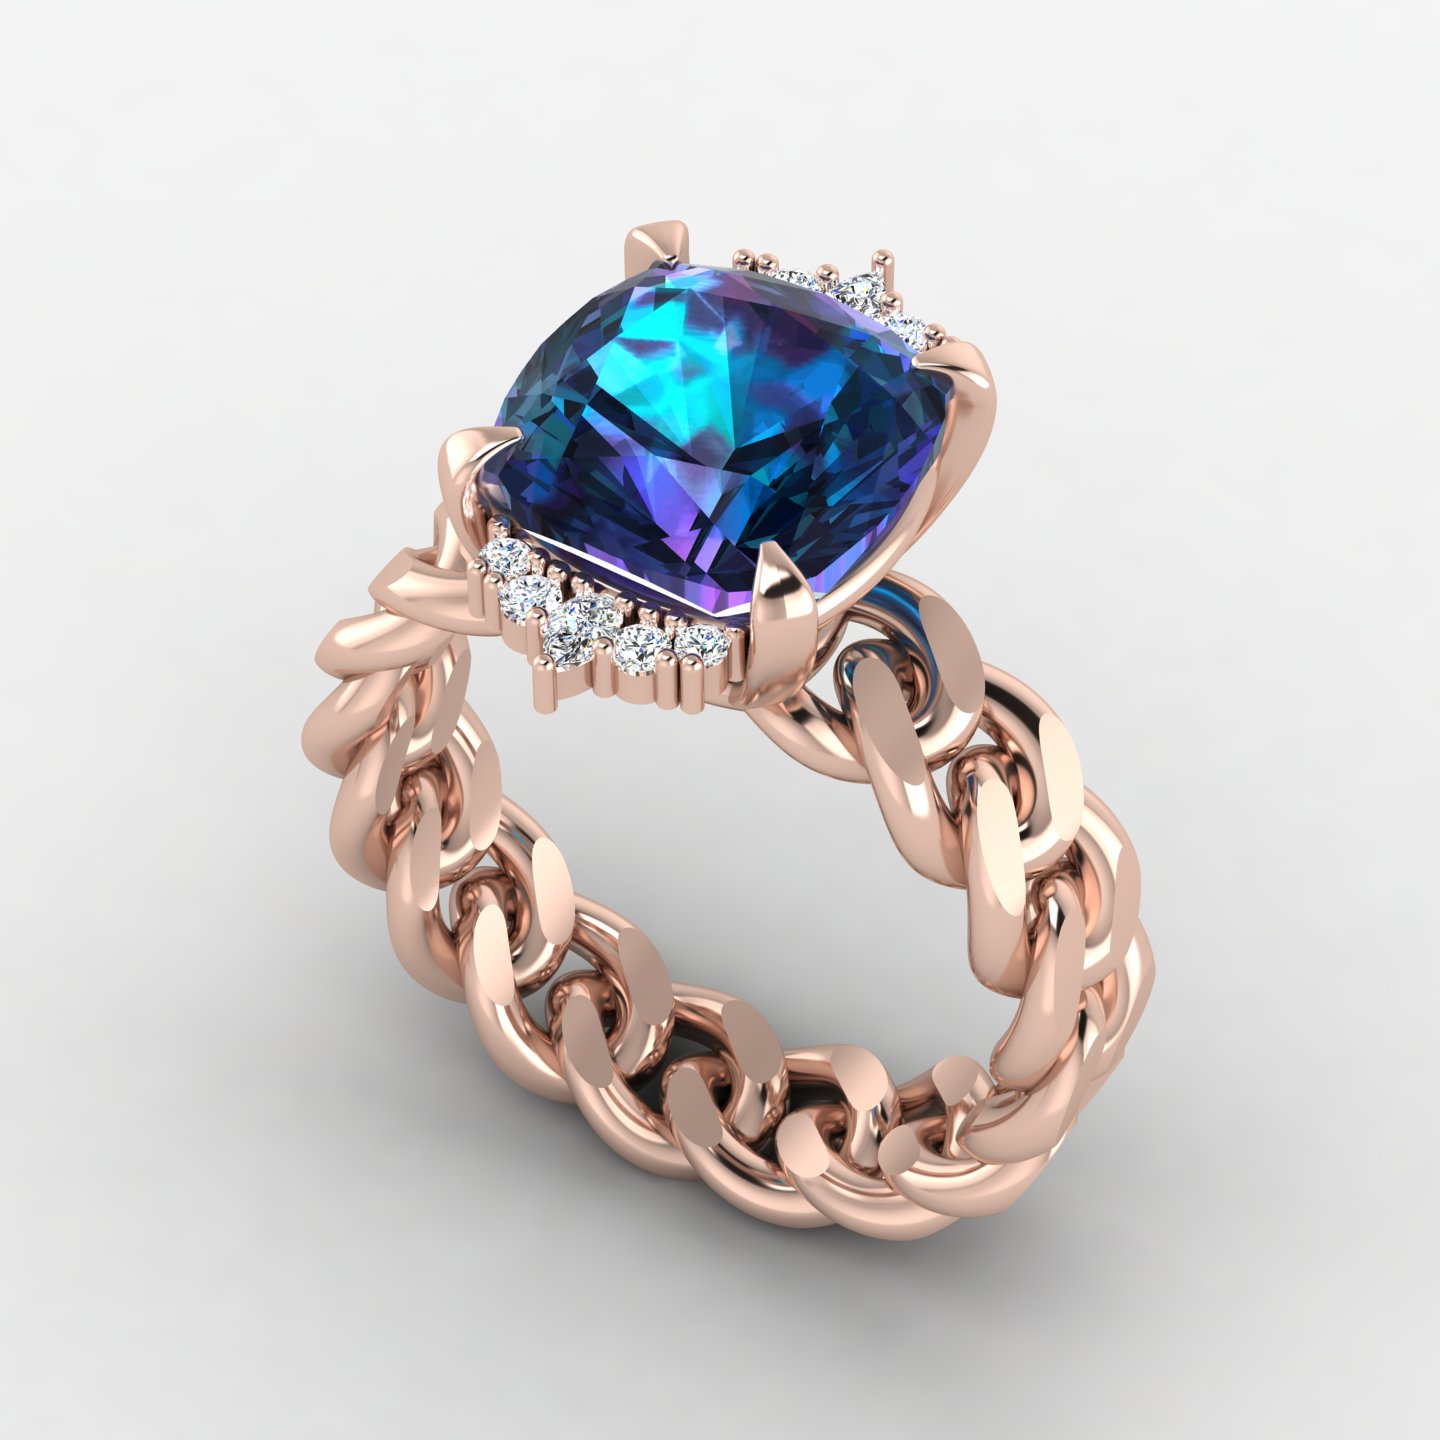 Enchanted Azure Chain Ring